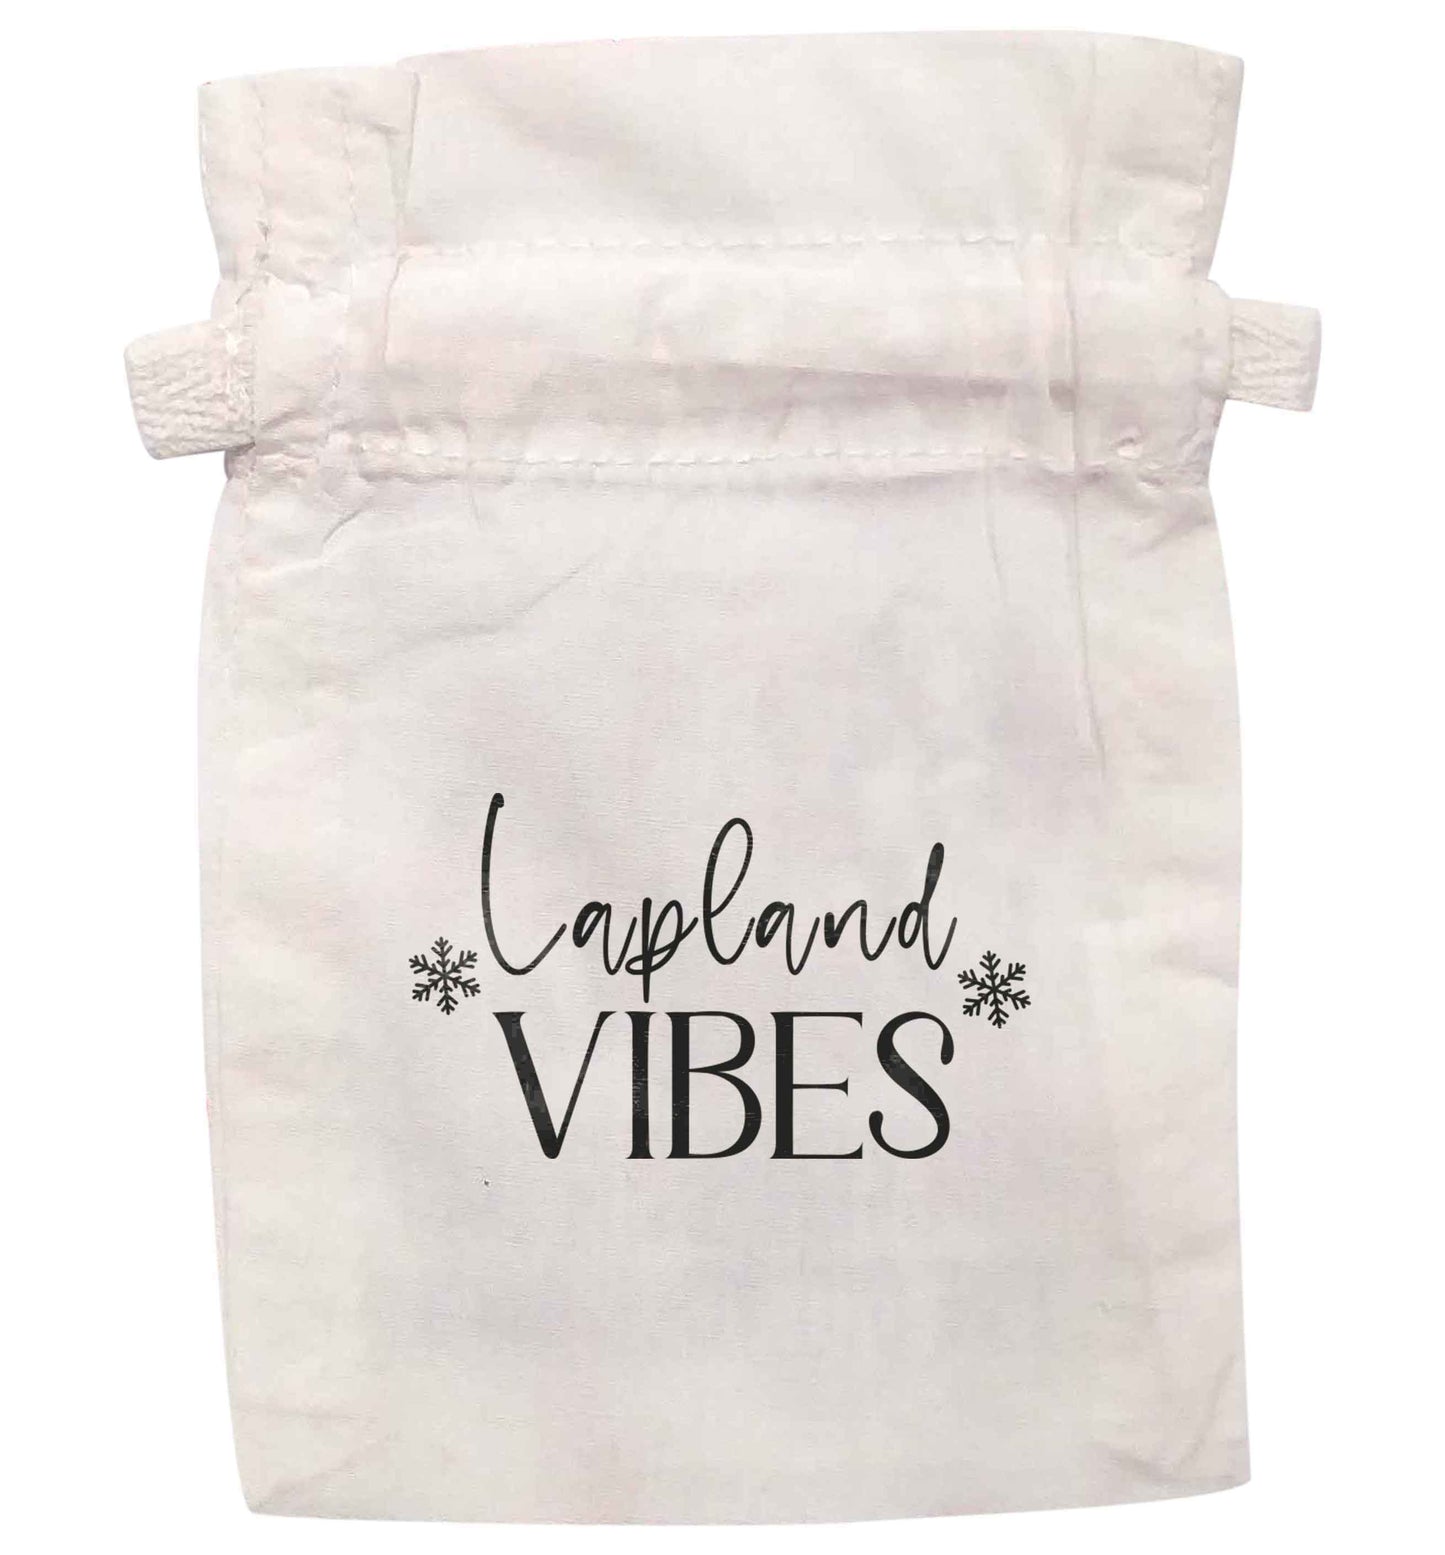 Lapland vibes | XS - L | Pouch / Drawstring bag / Sack | Organic Cotton | Bulk discounts available!